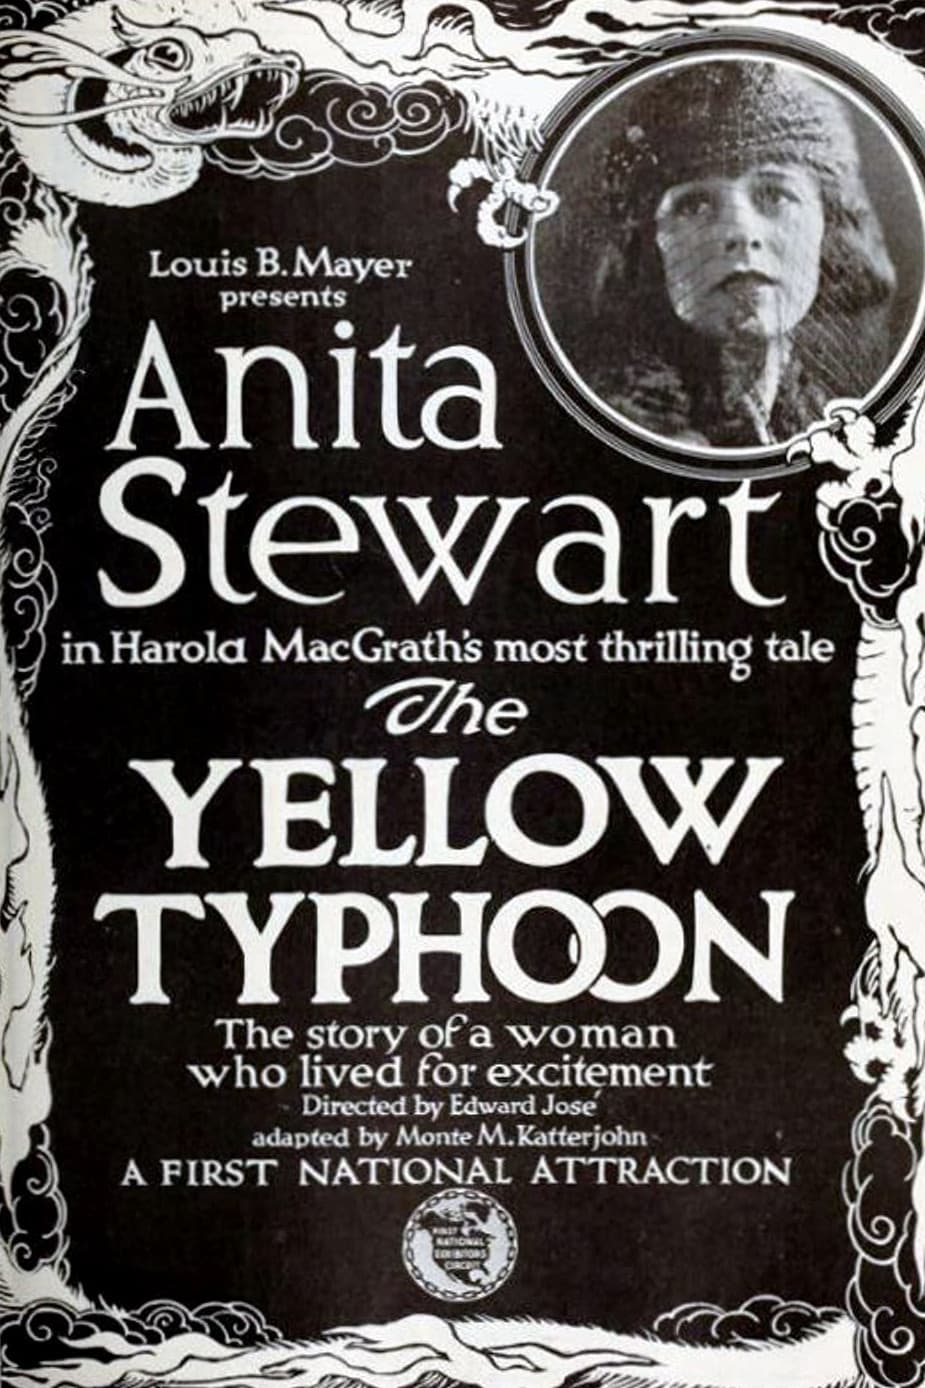 The Yellow Typhoon